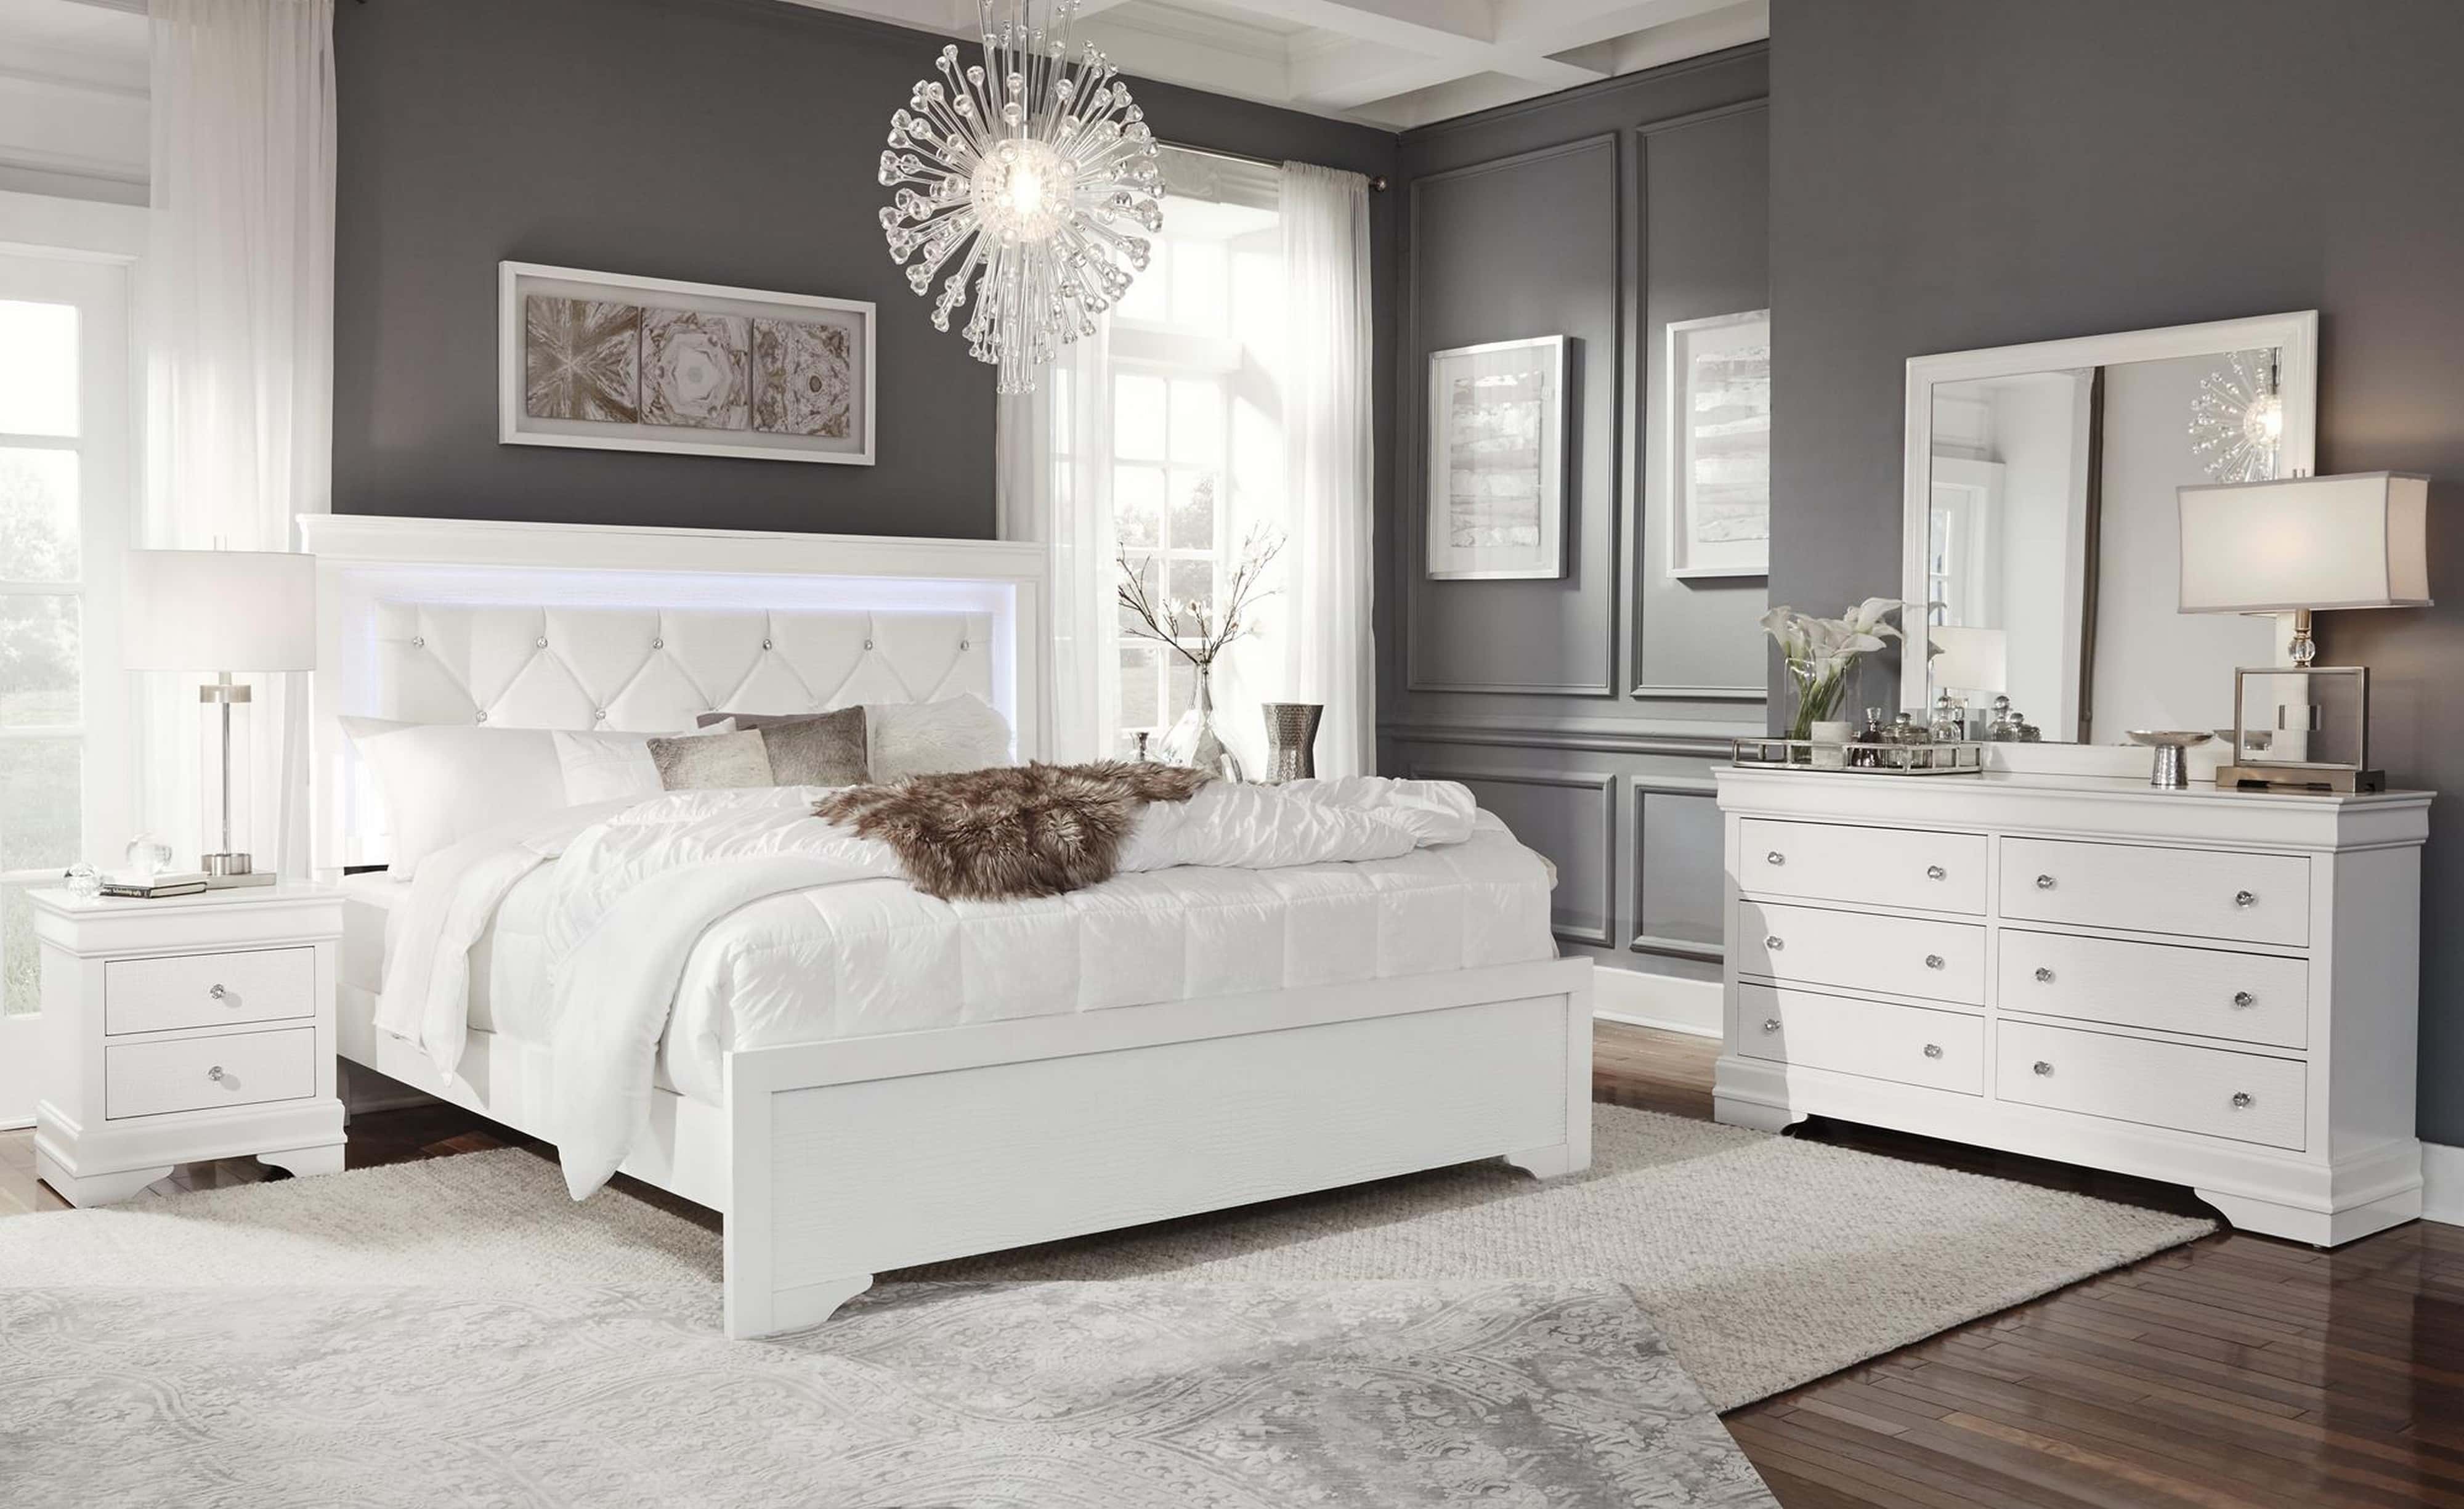 Pompei Metallic White Bedroom Set by Global Furniture